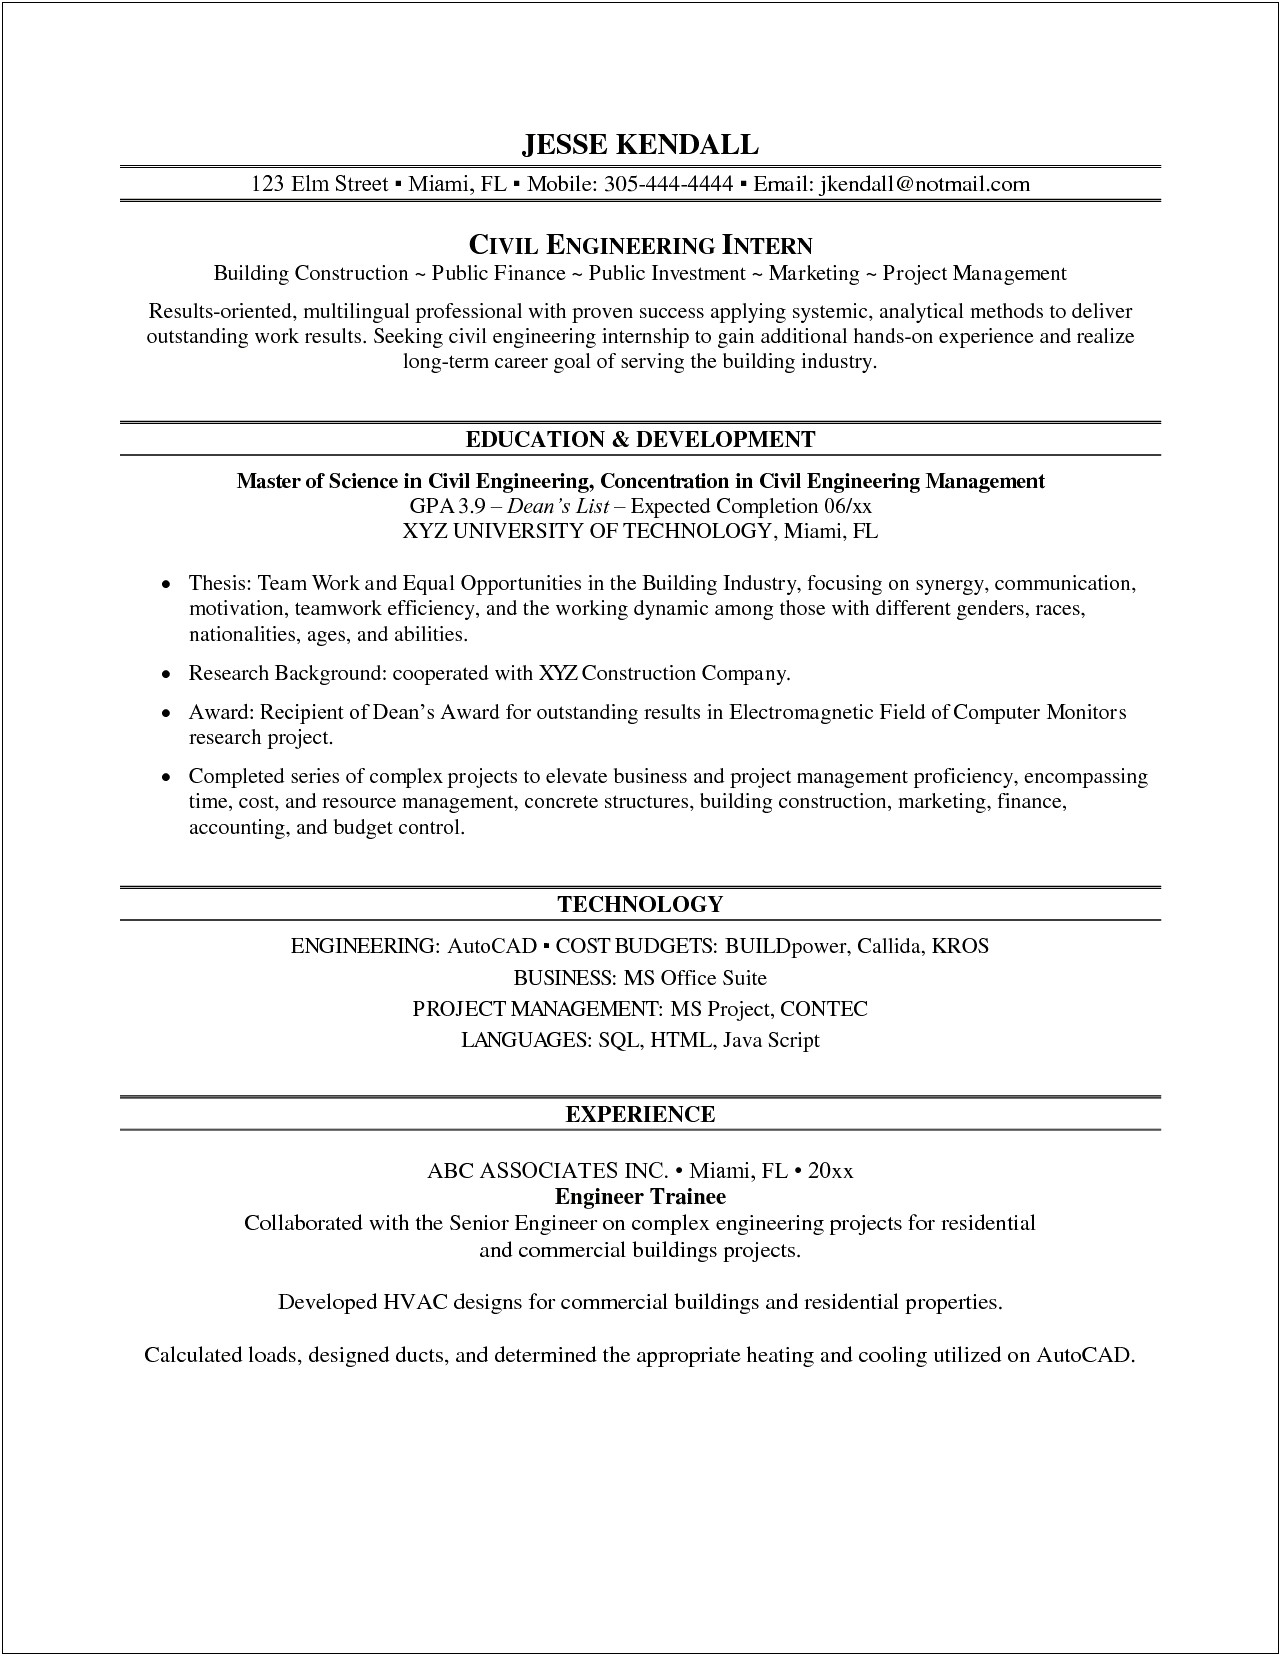 Sample Resume For Internship In Civil Engineering